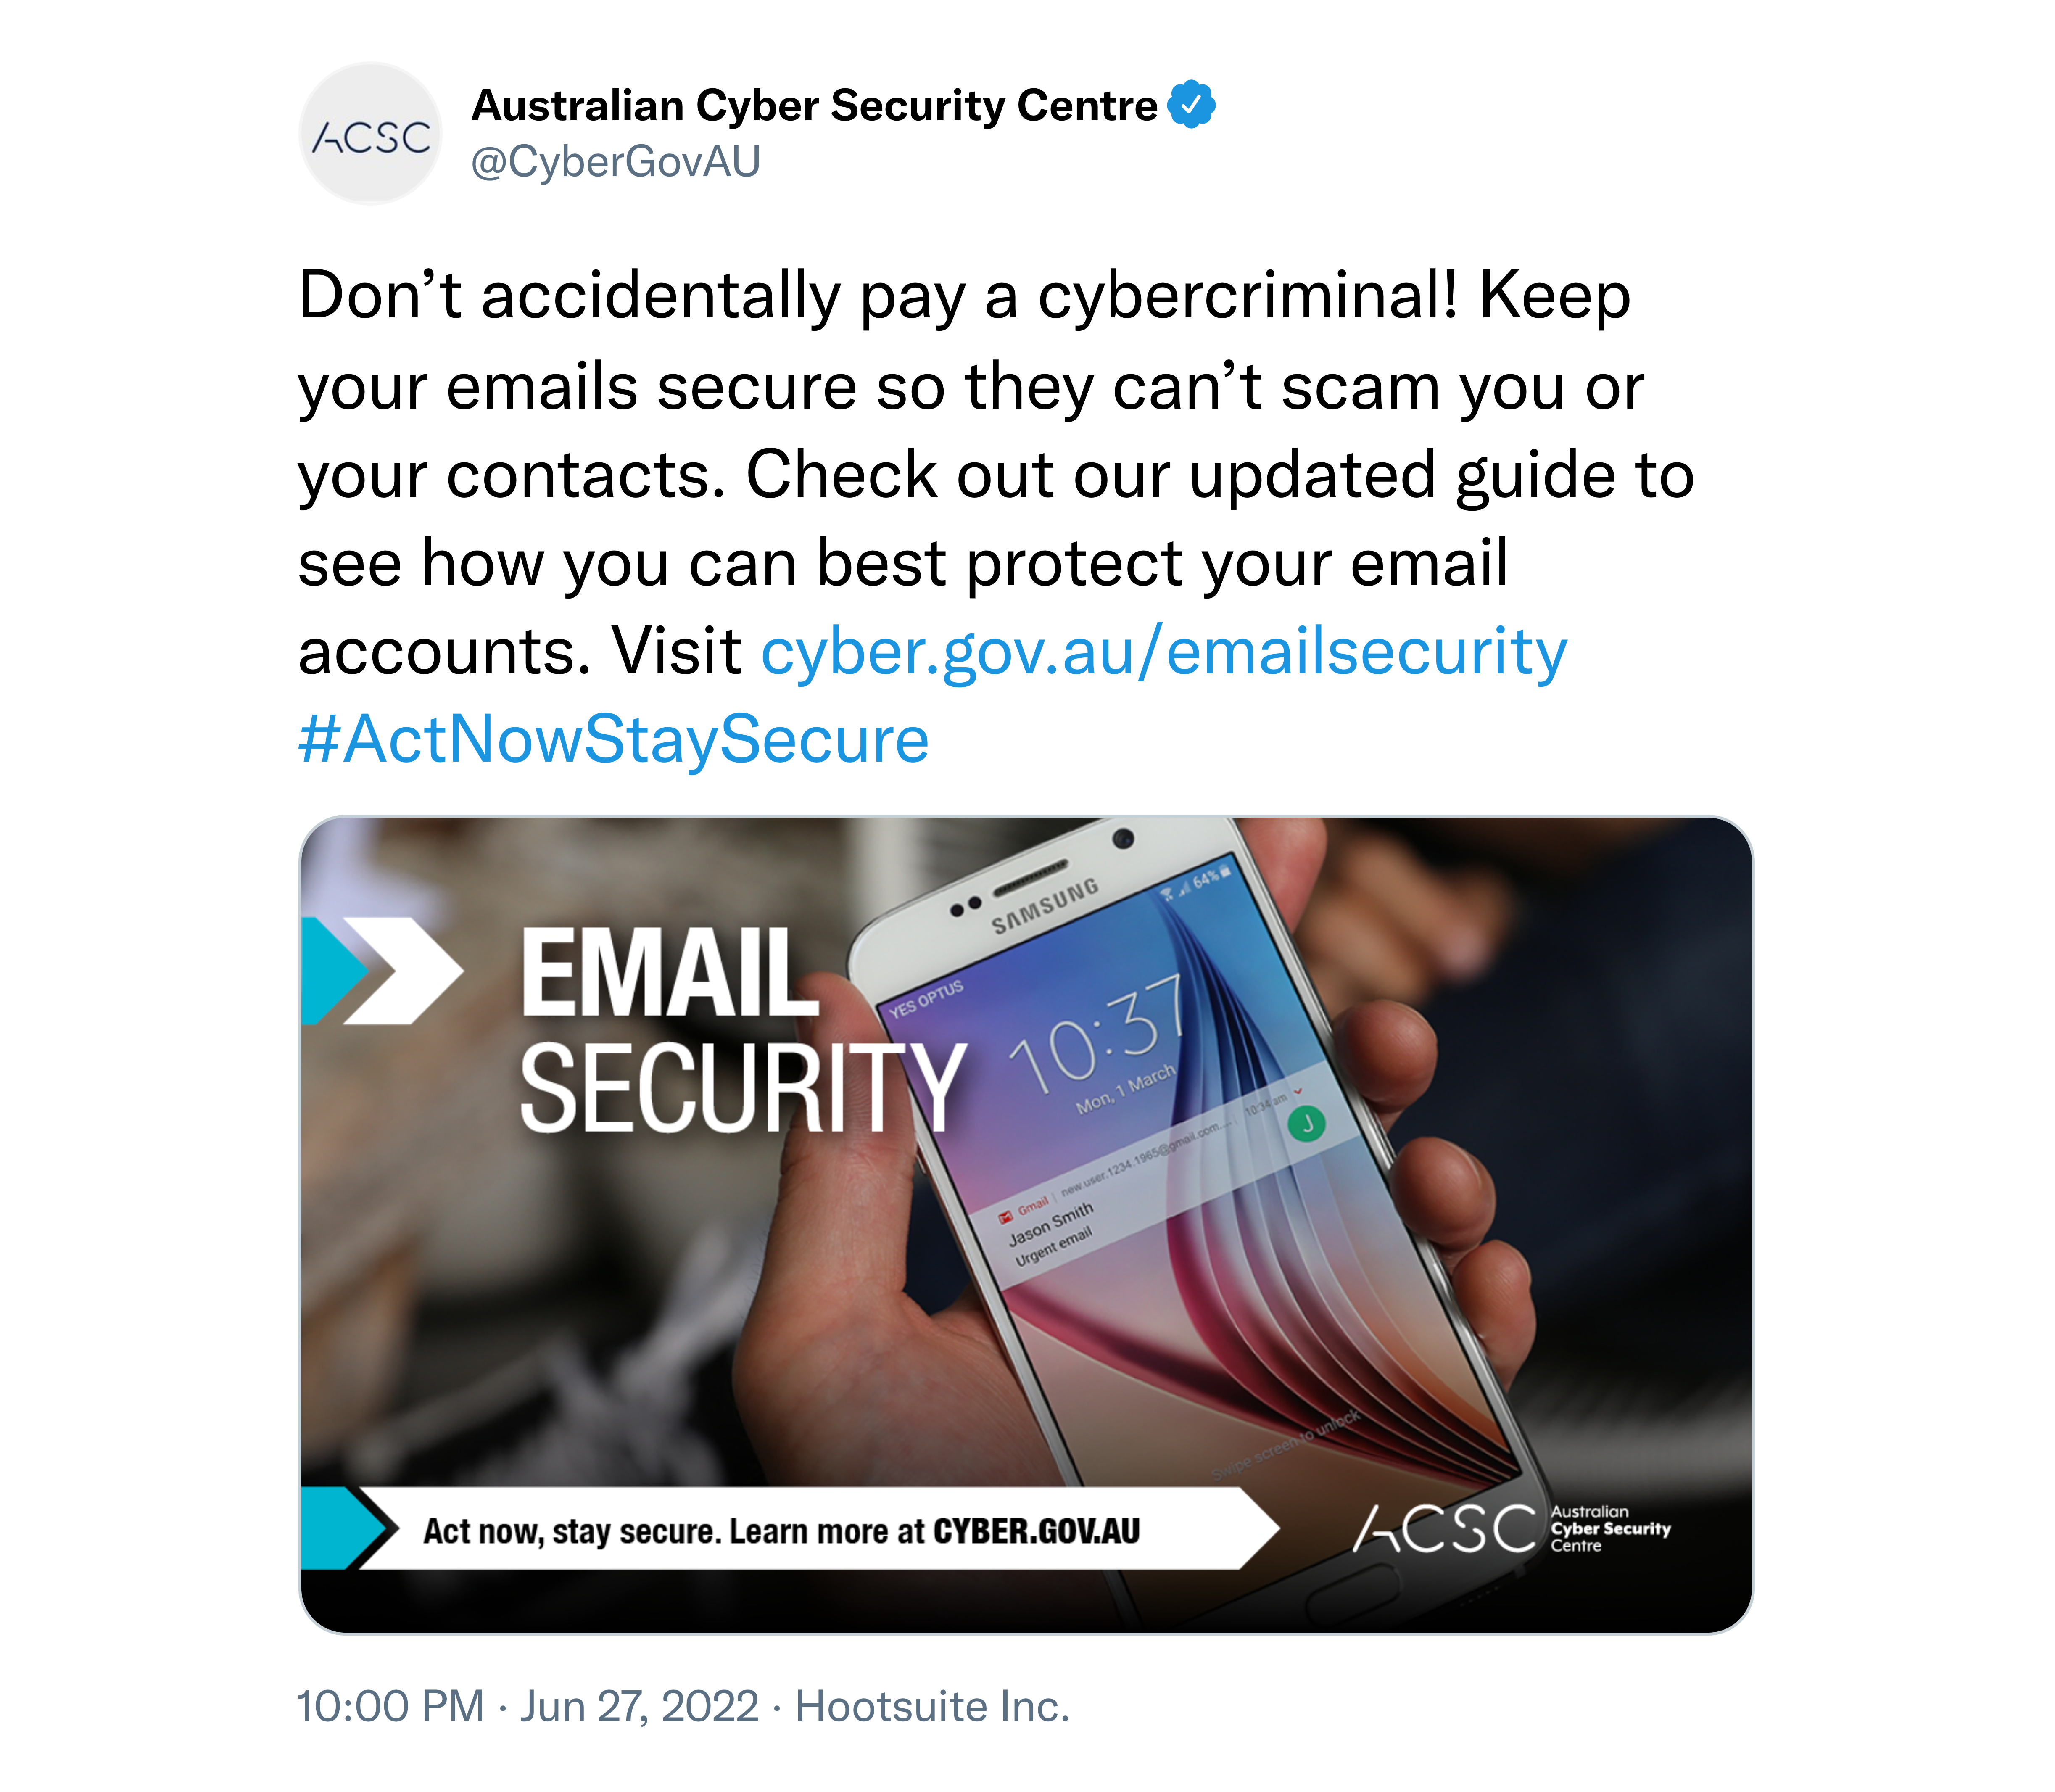 ACSC Email Security tweet